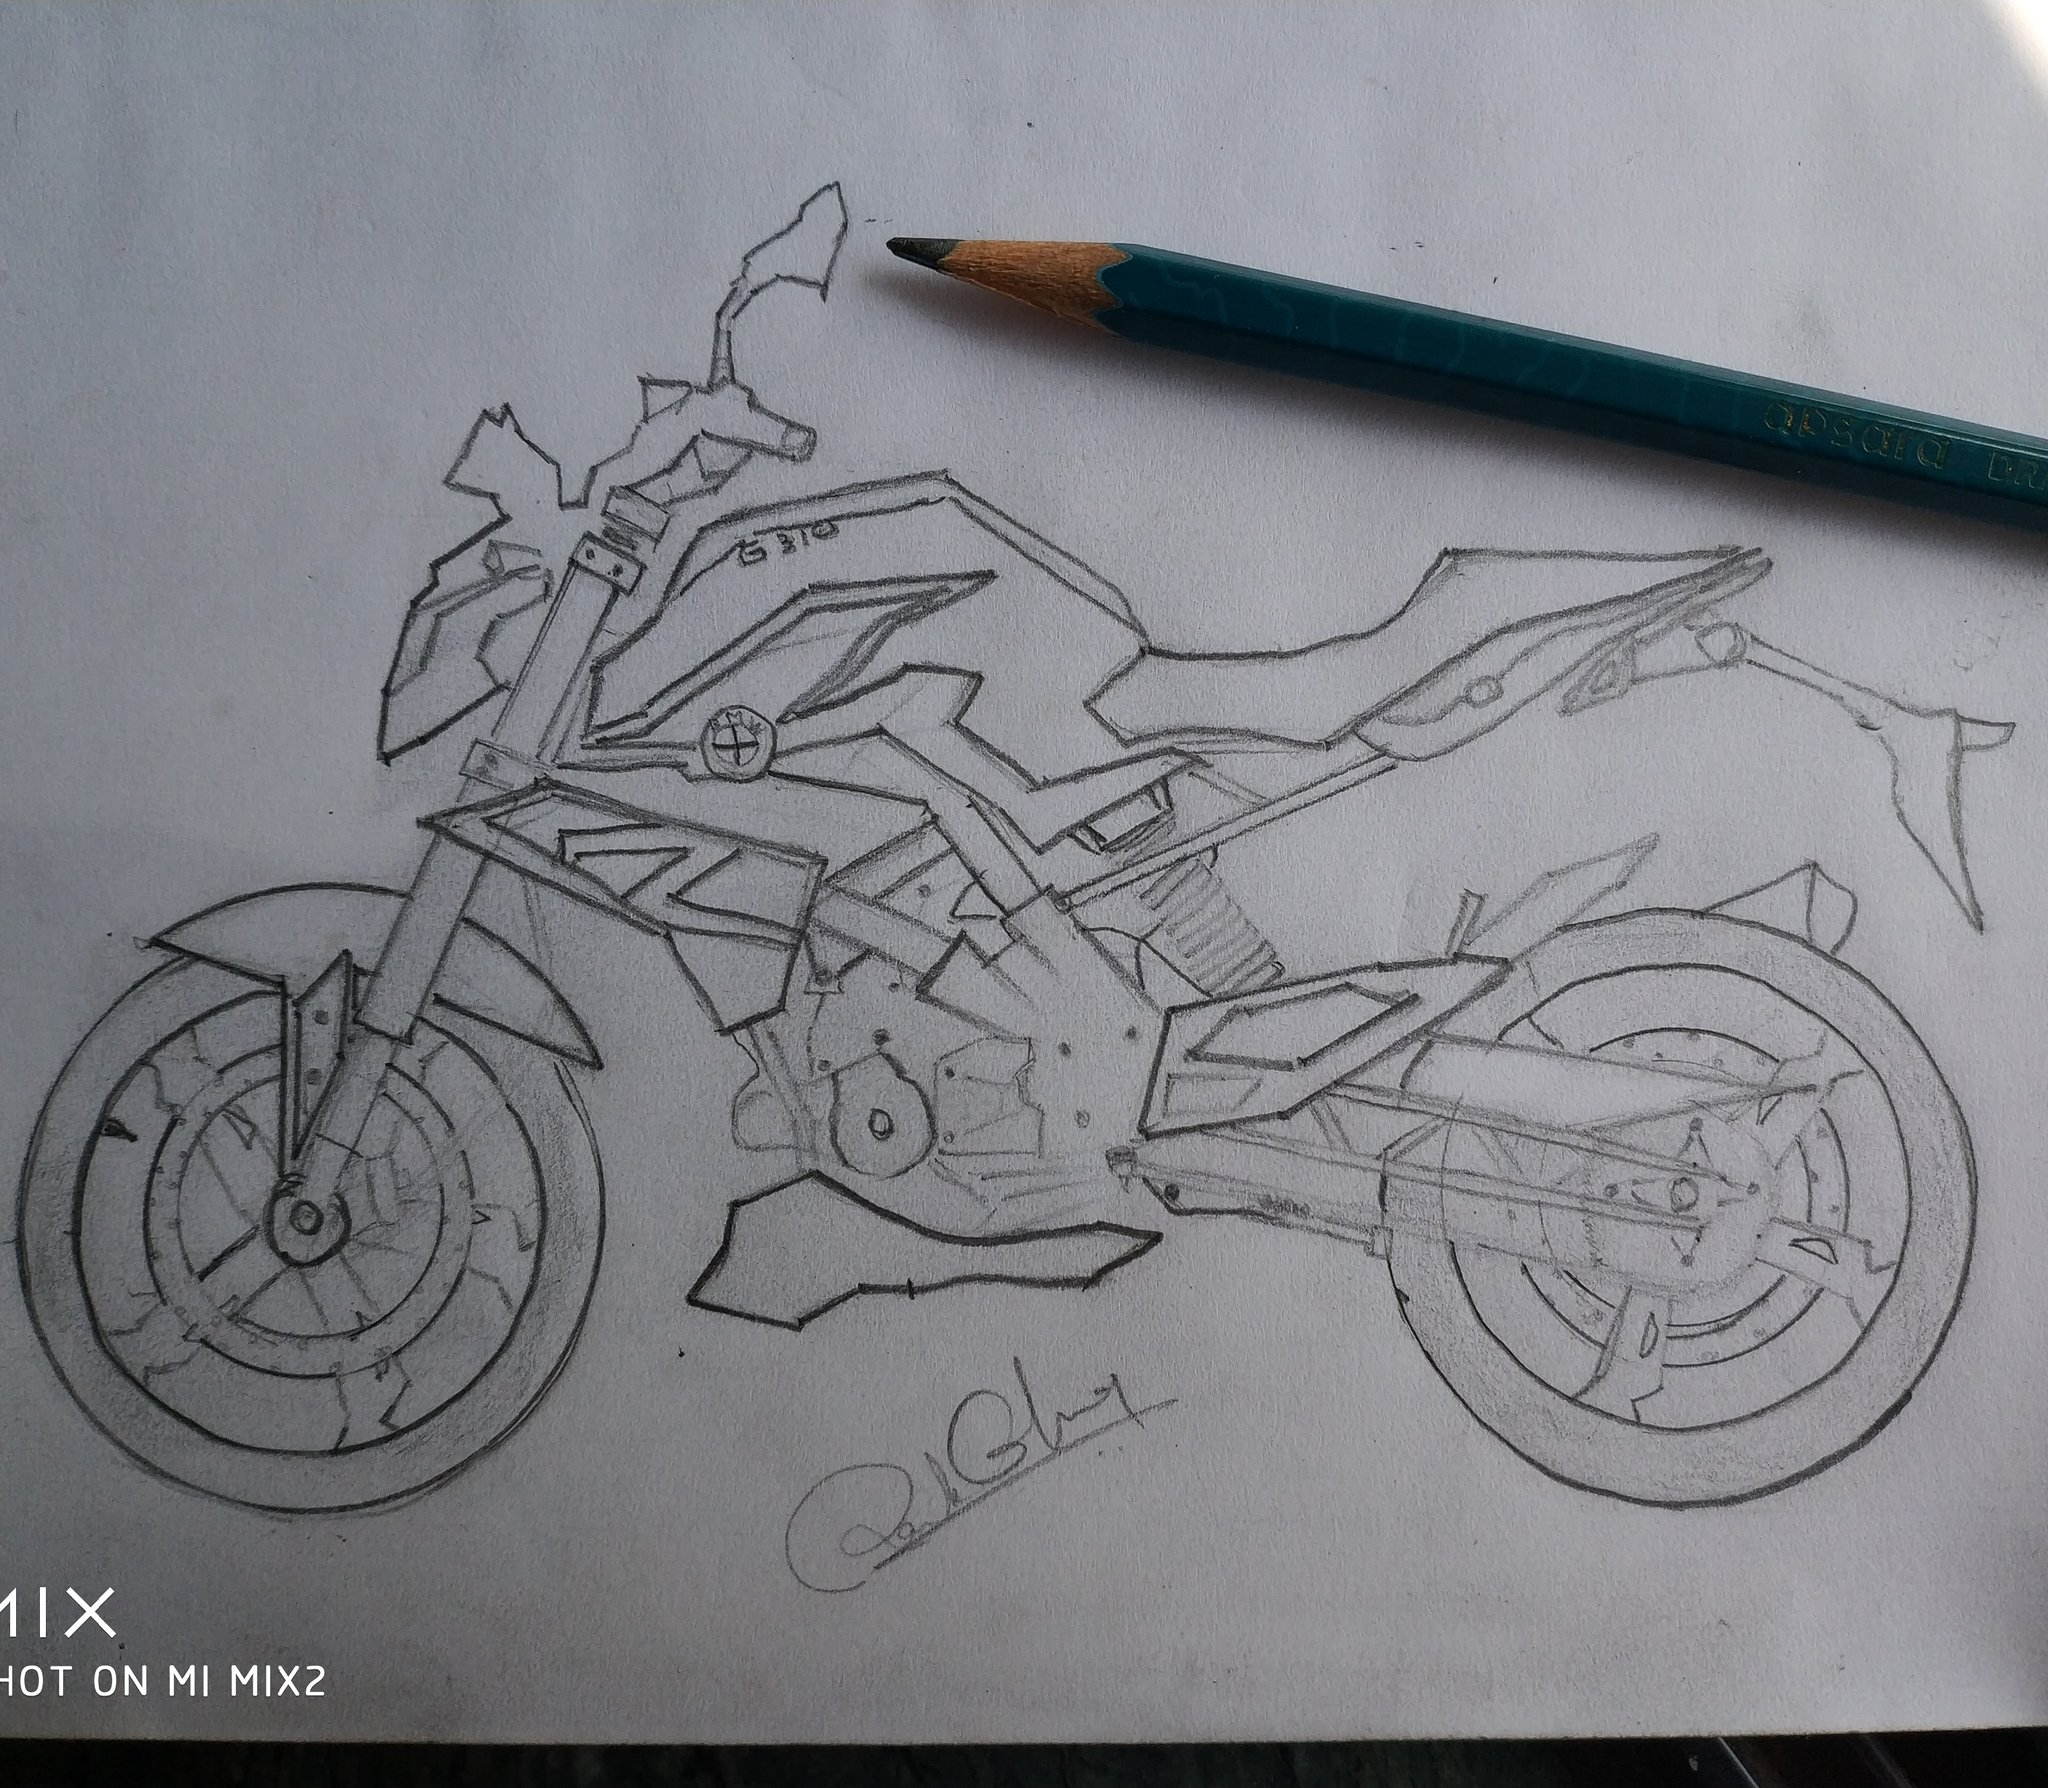 Large, 100x70 cm KTM bike drawing : r/pics